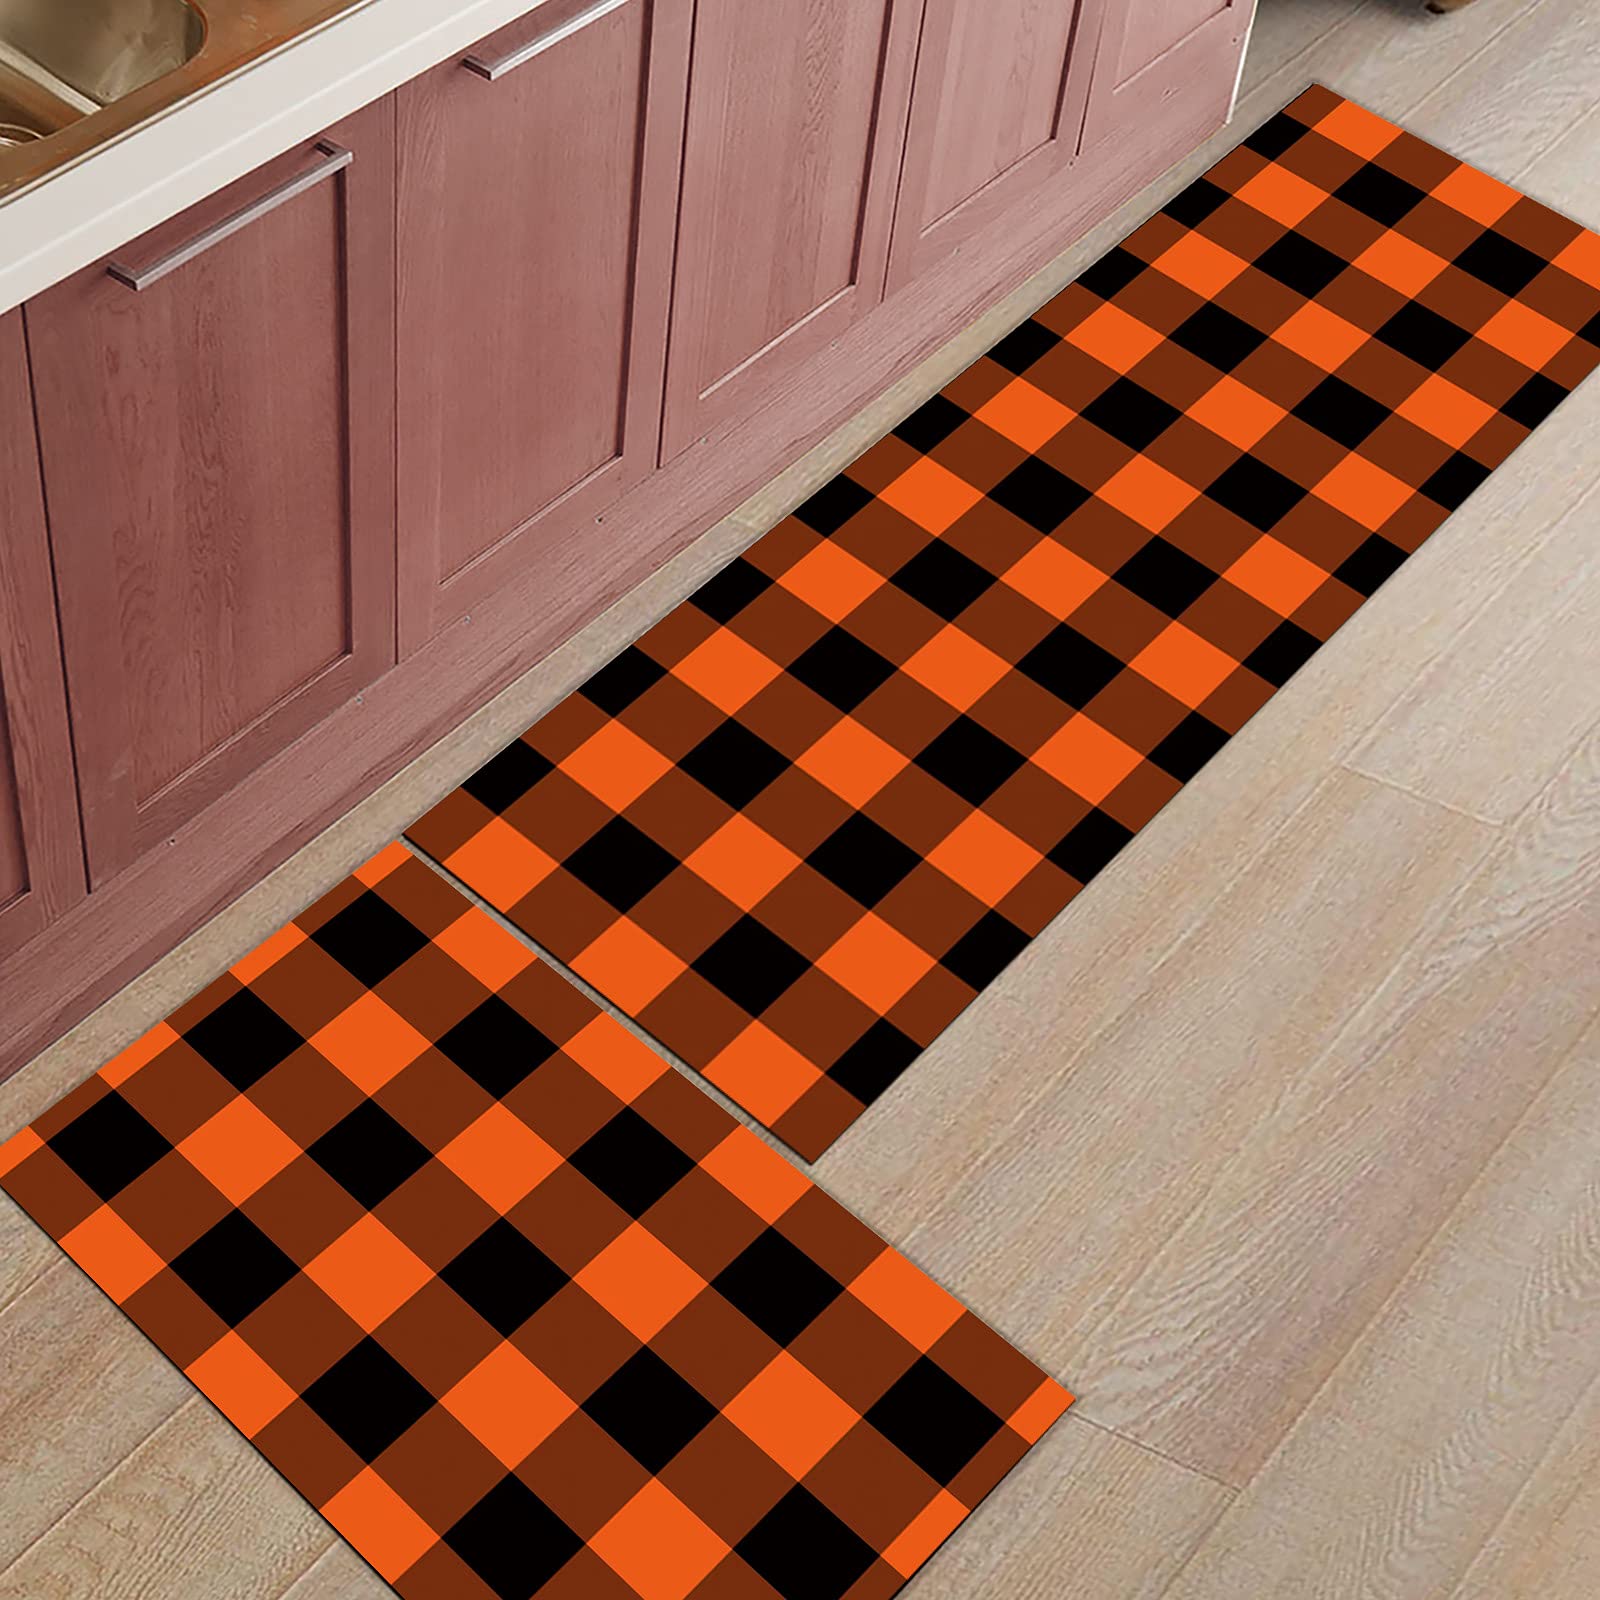 Savannan Kitchen Runner Rug Set 2 PCS, Halloween Orange and Black Buffalo Checke Plaid Runner Carpet Door Mats with Non Slip Rubber Backing Floor Mat for Laundry Bedside